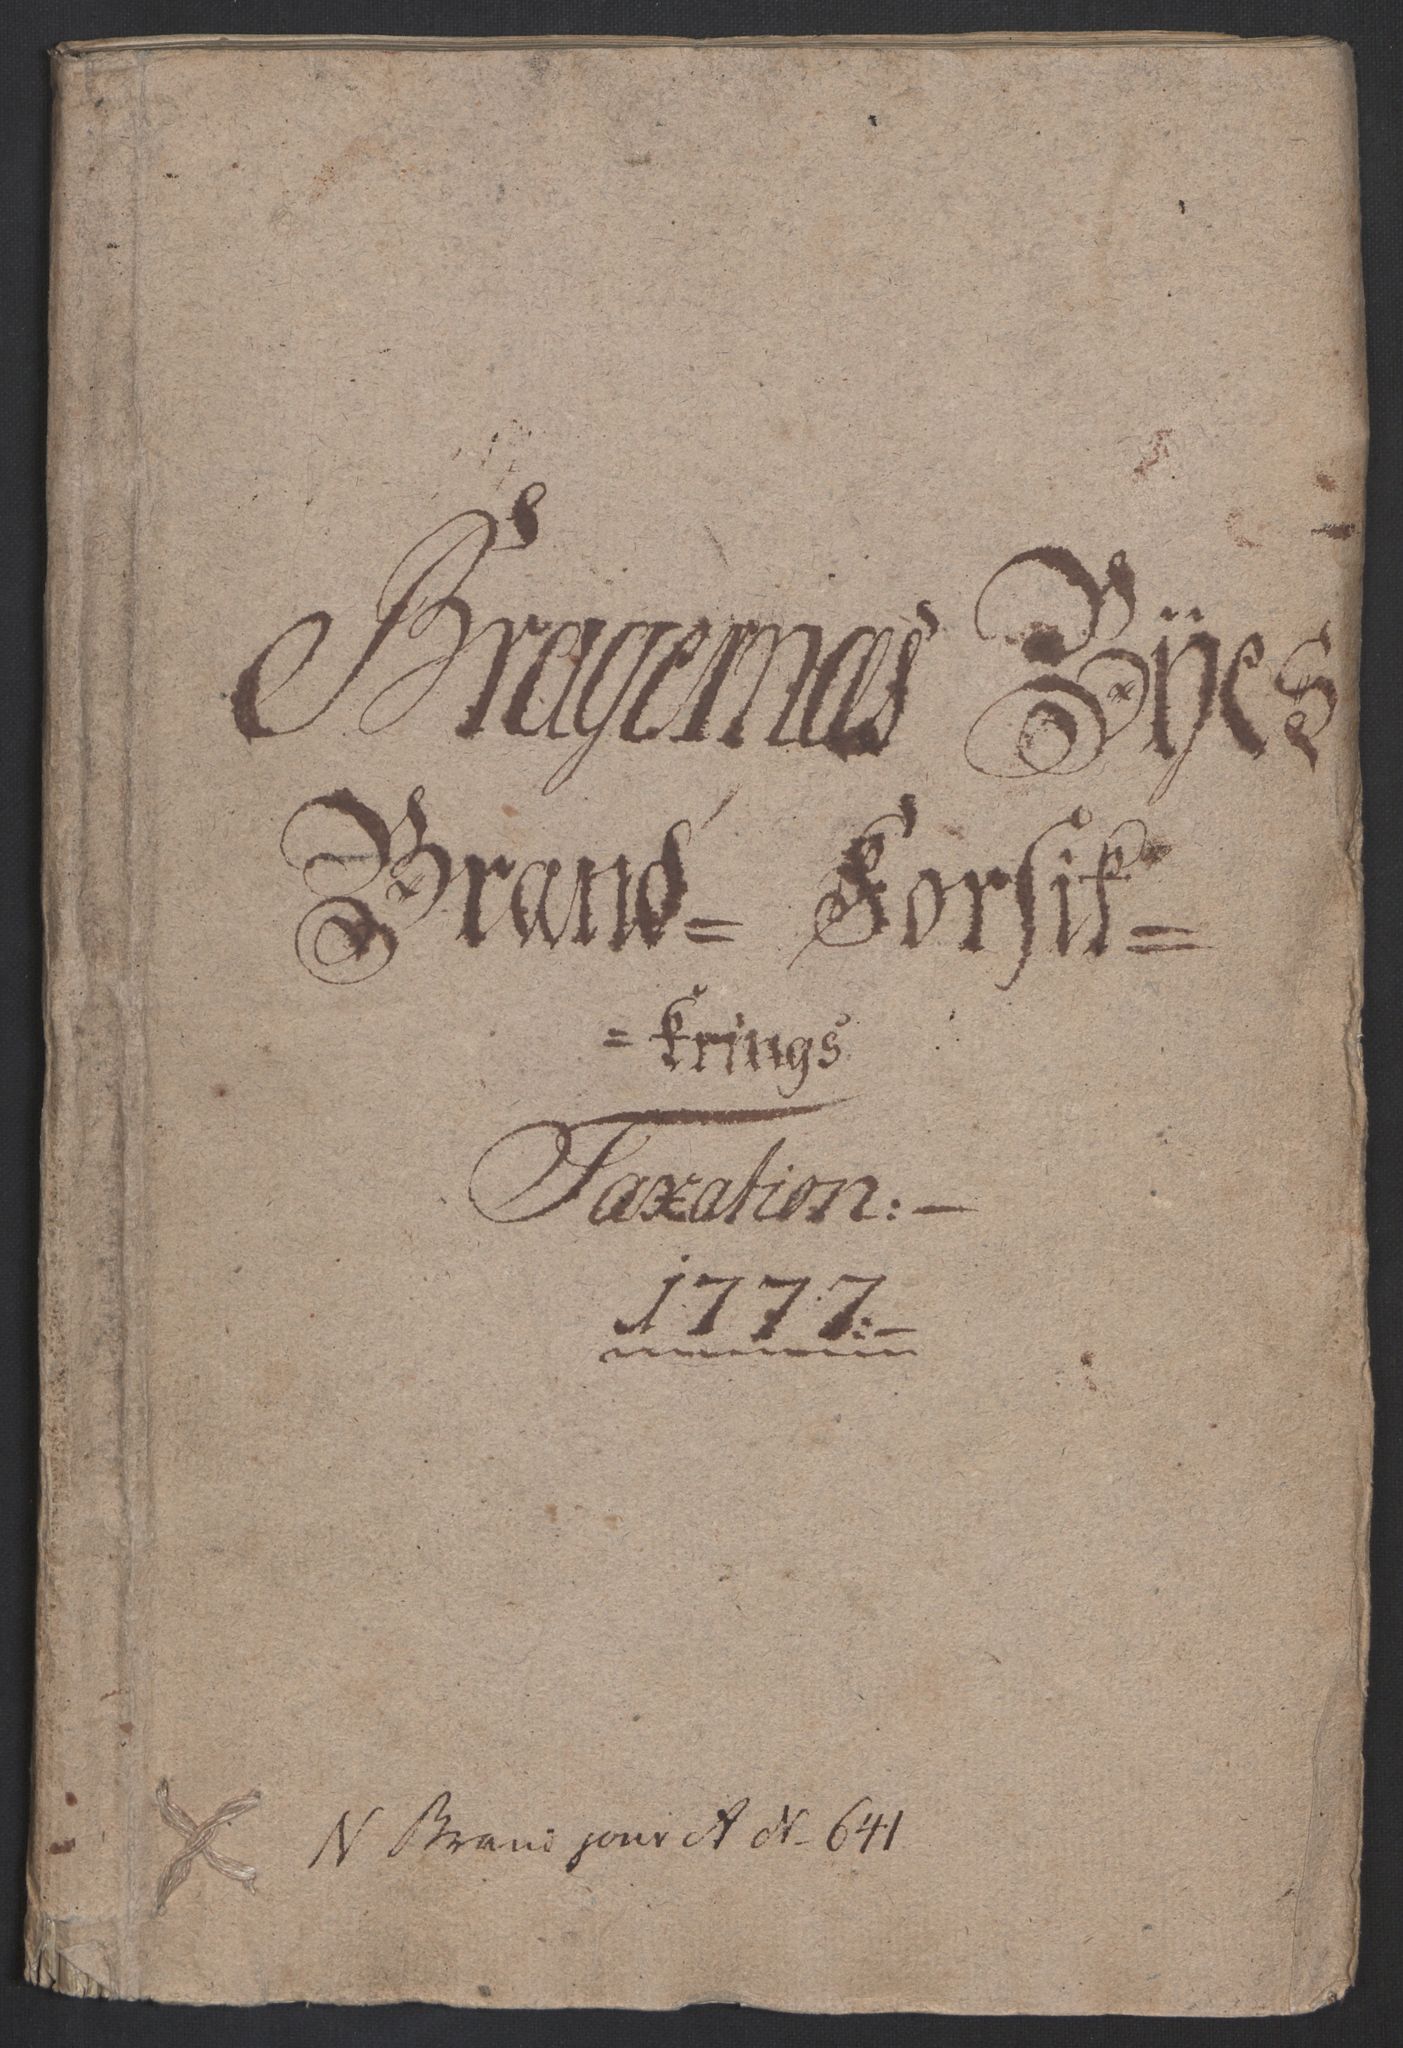 Kommersekollegiet, Brannforsikringskontoret 1767-1814, RA/EA-5458/F/Fa/L0008/0003: Bragernes / Branntakstprotokoll, 1777